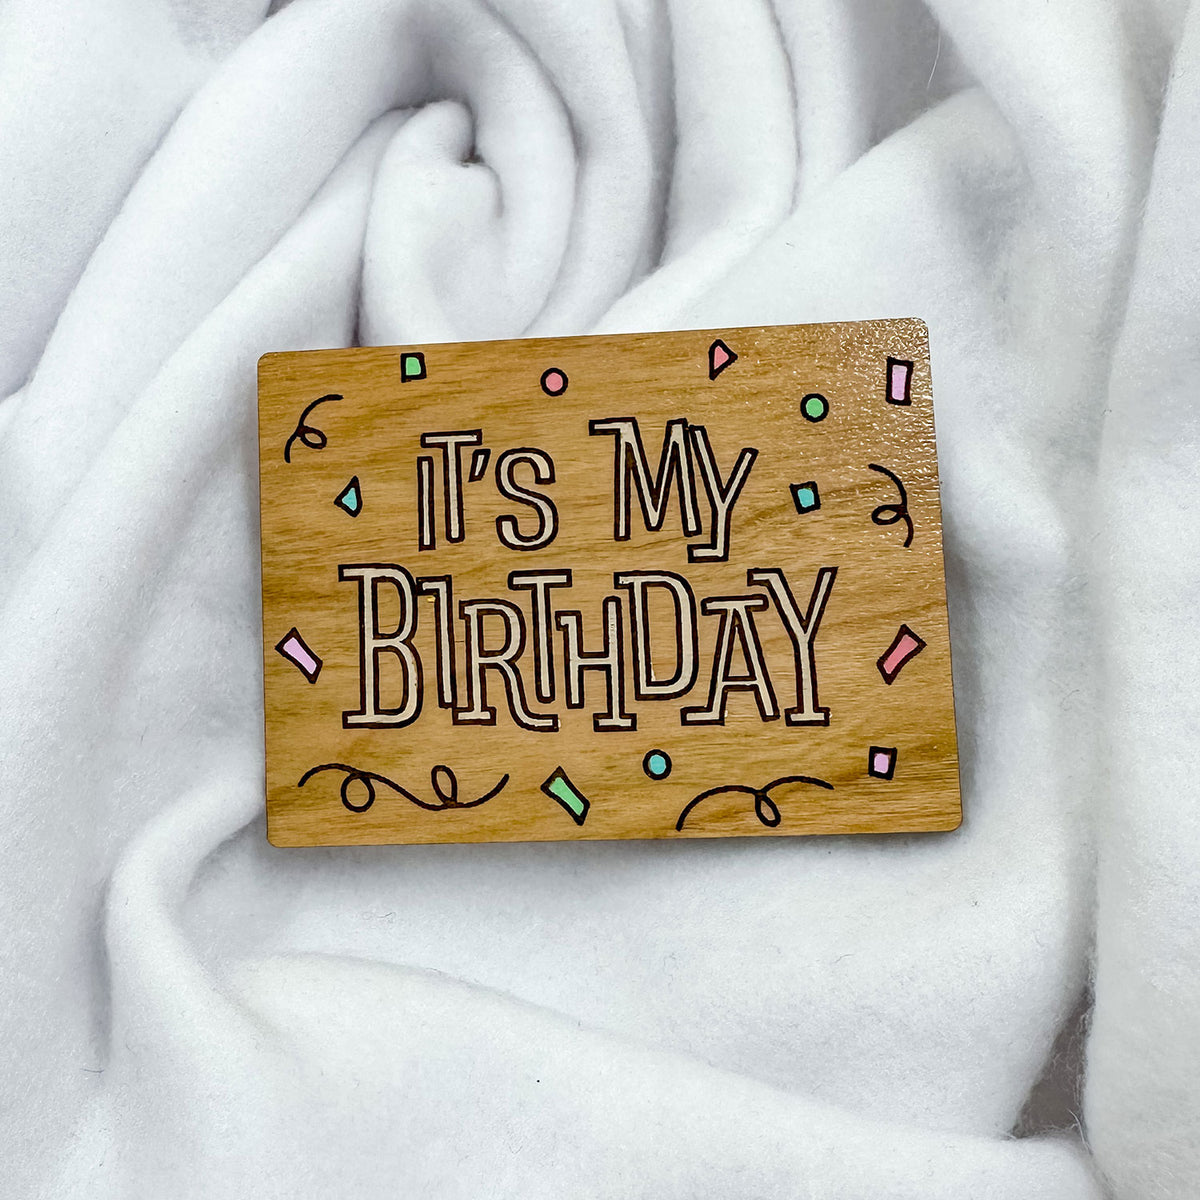 Pin on My Birthday information